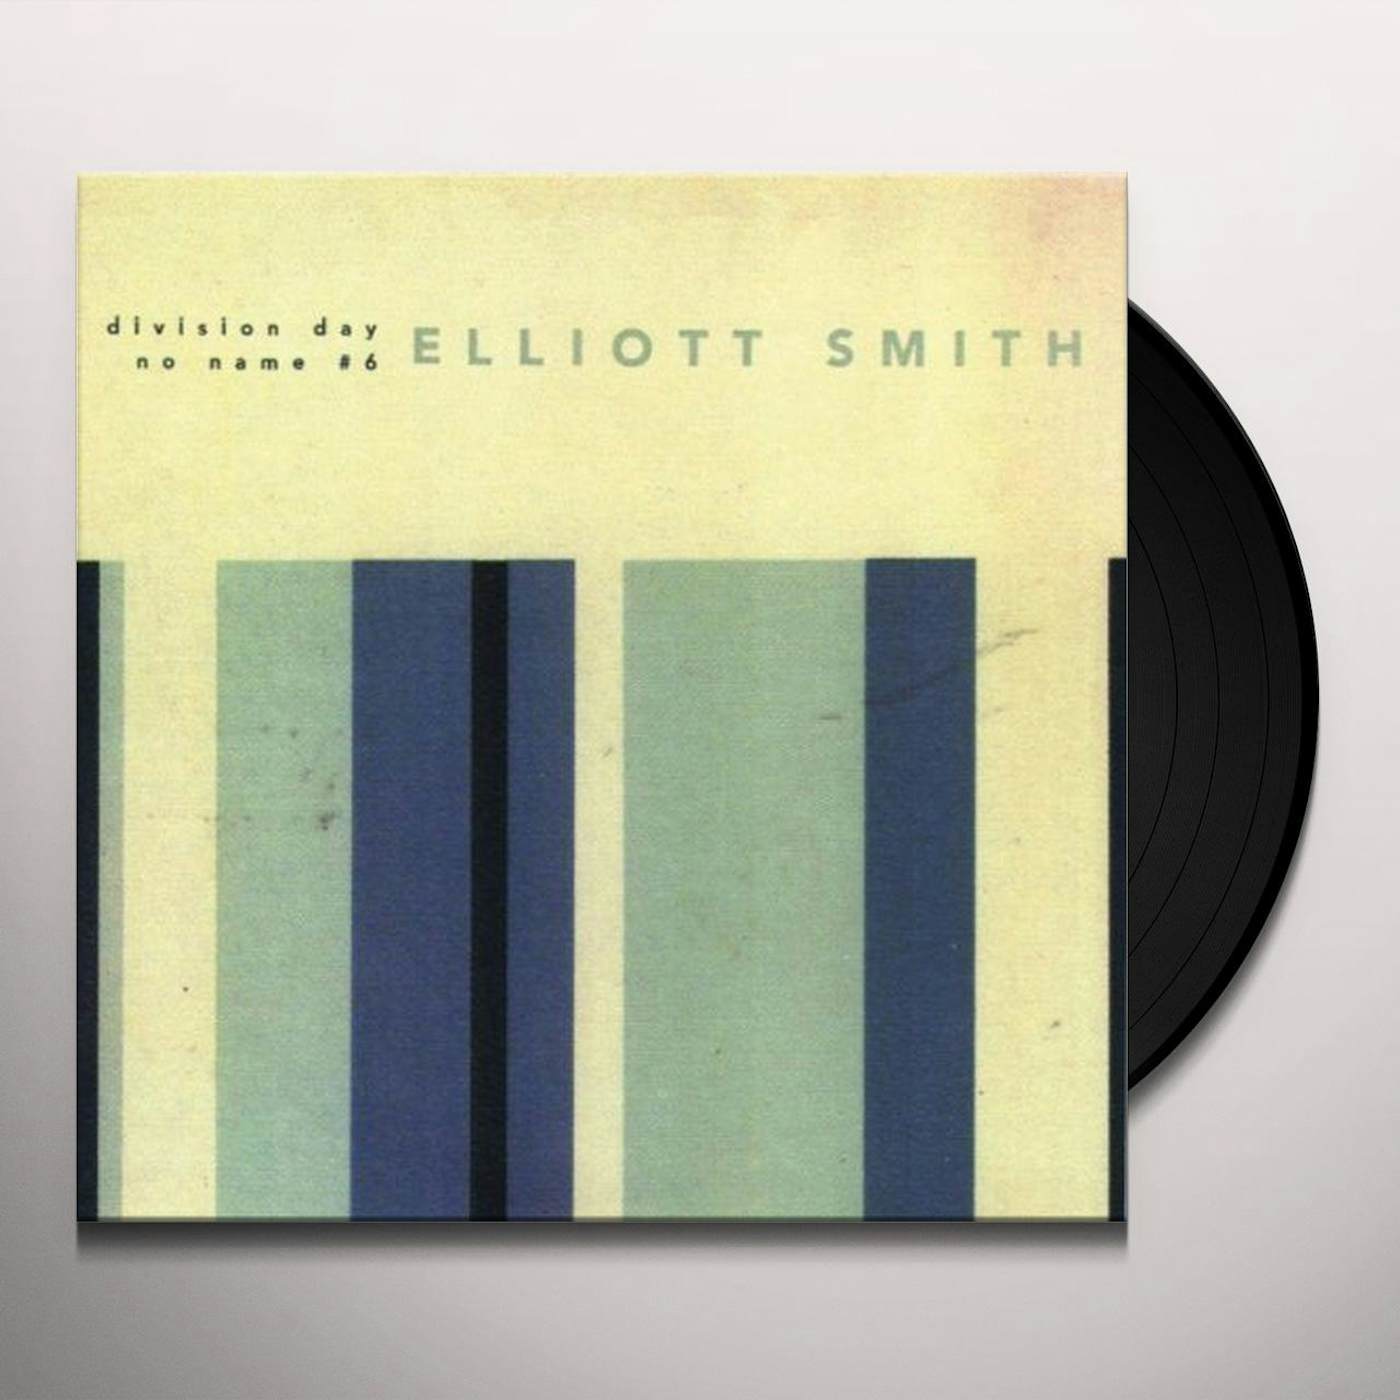 Elliott Smith DIVISION DAY (HALF DOUBLE MINT HALF ELECTRIC BLUE) Vinyl Record